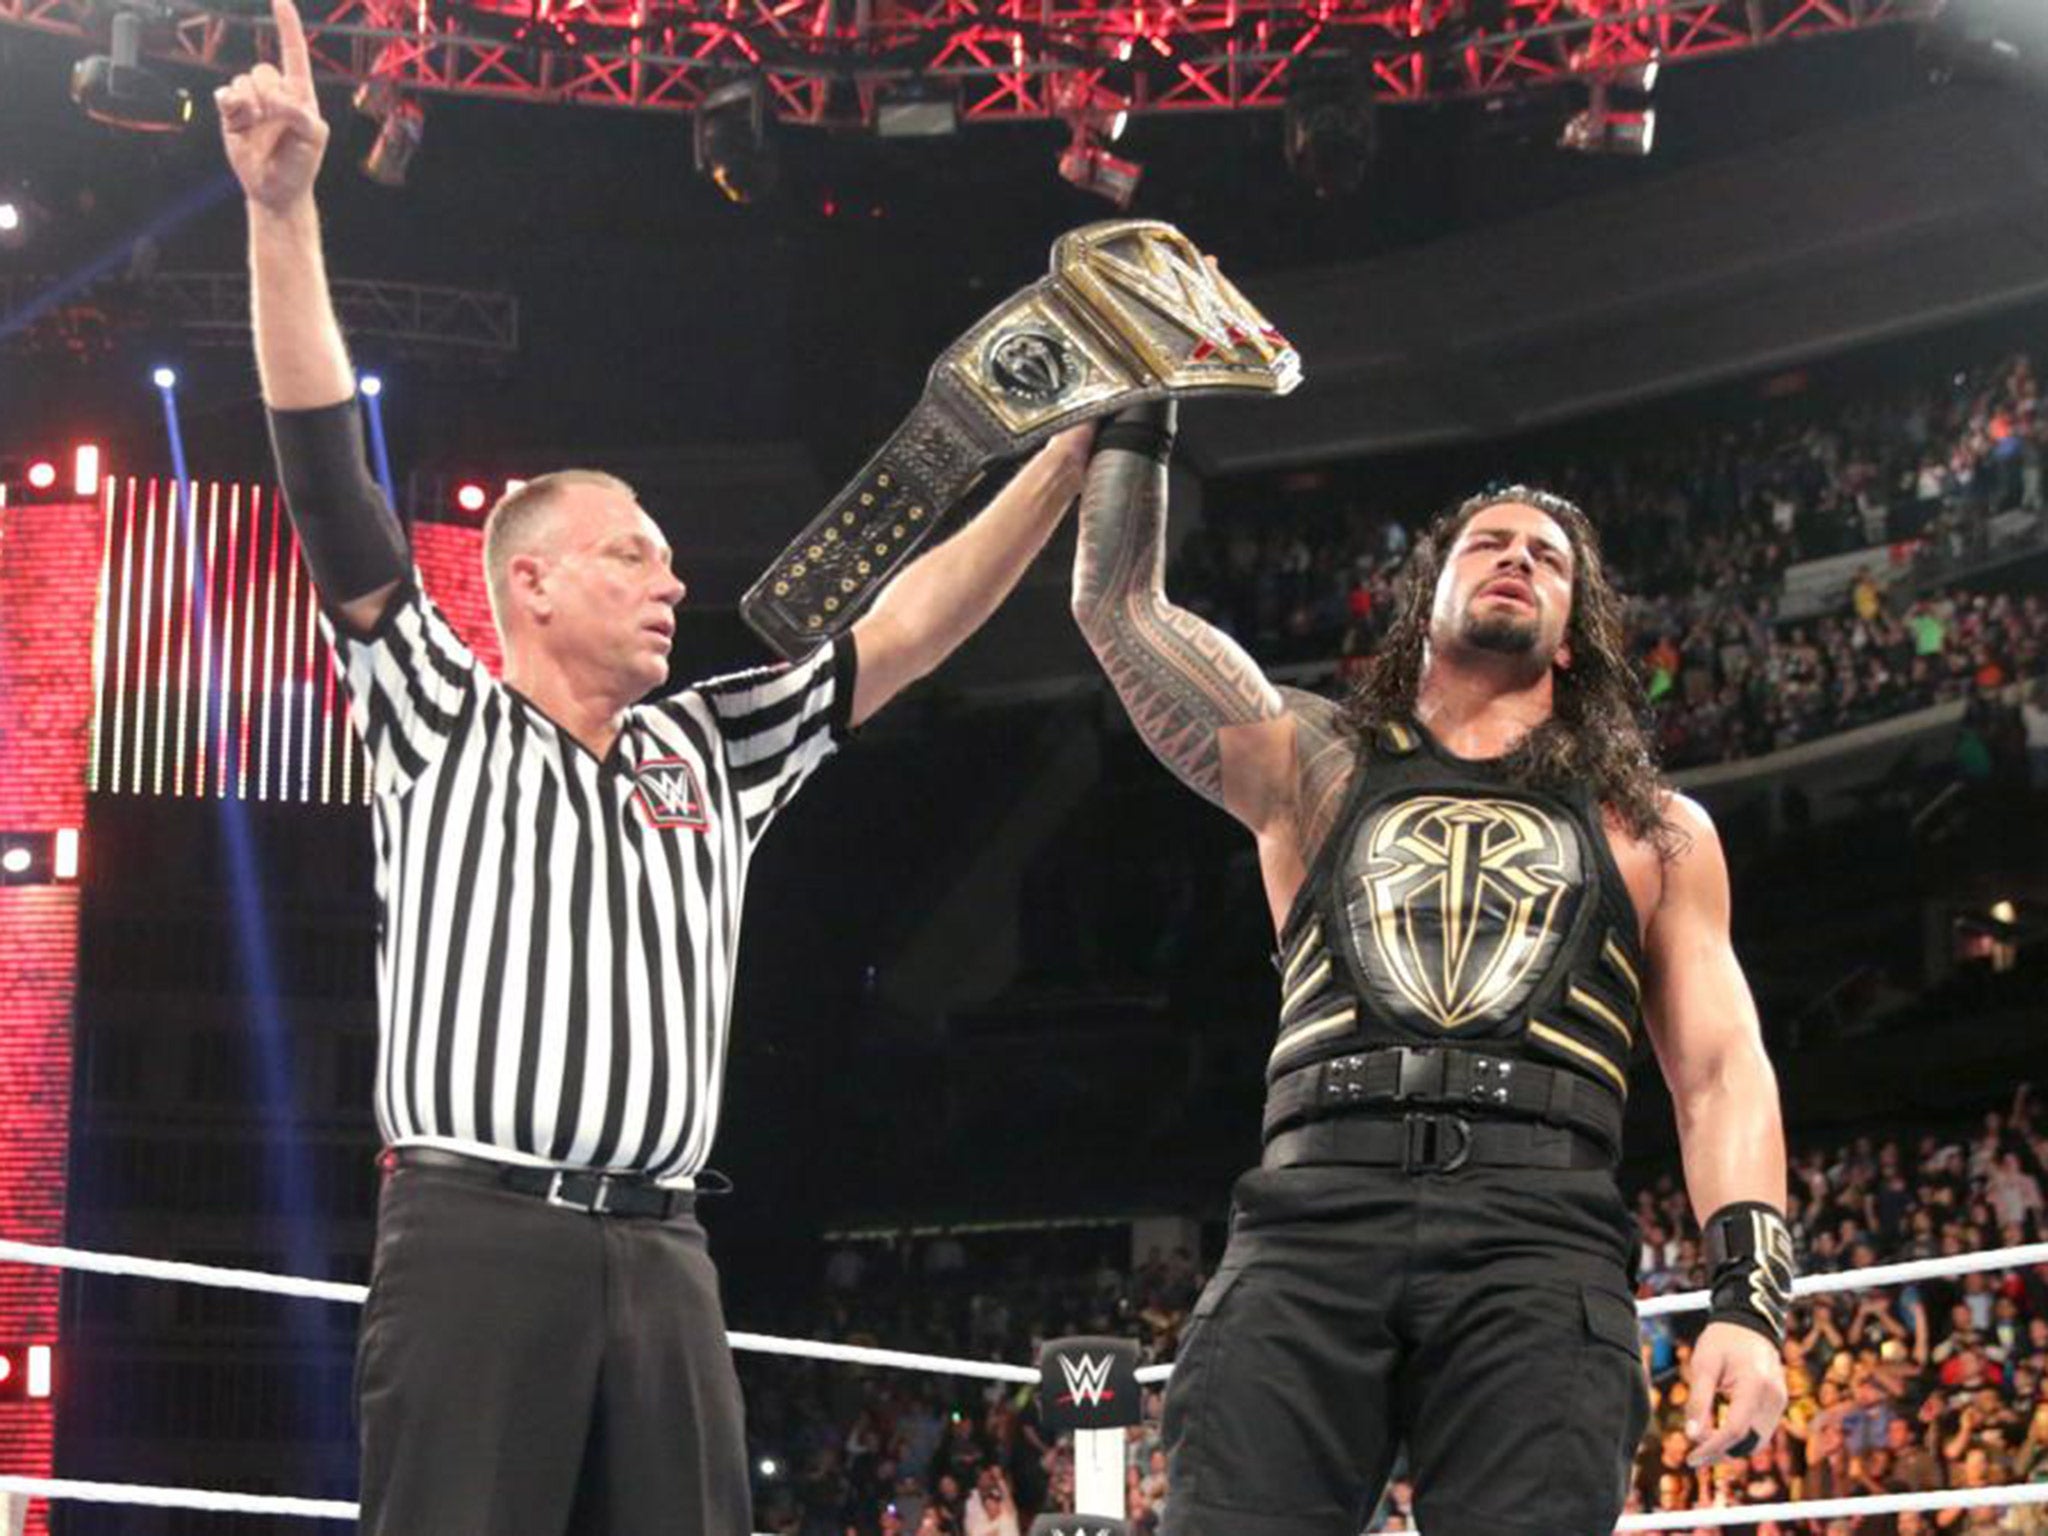 WWE champion Roman Reigns